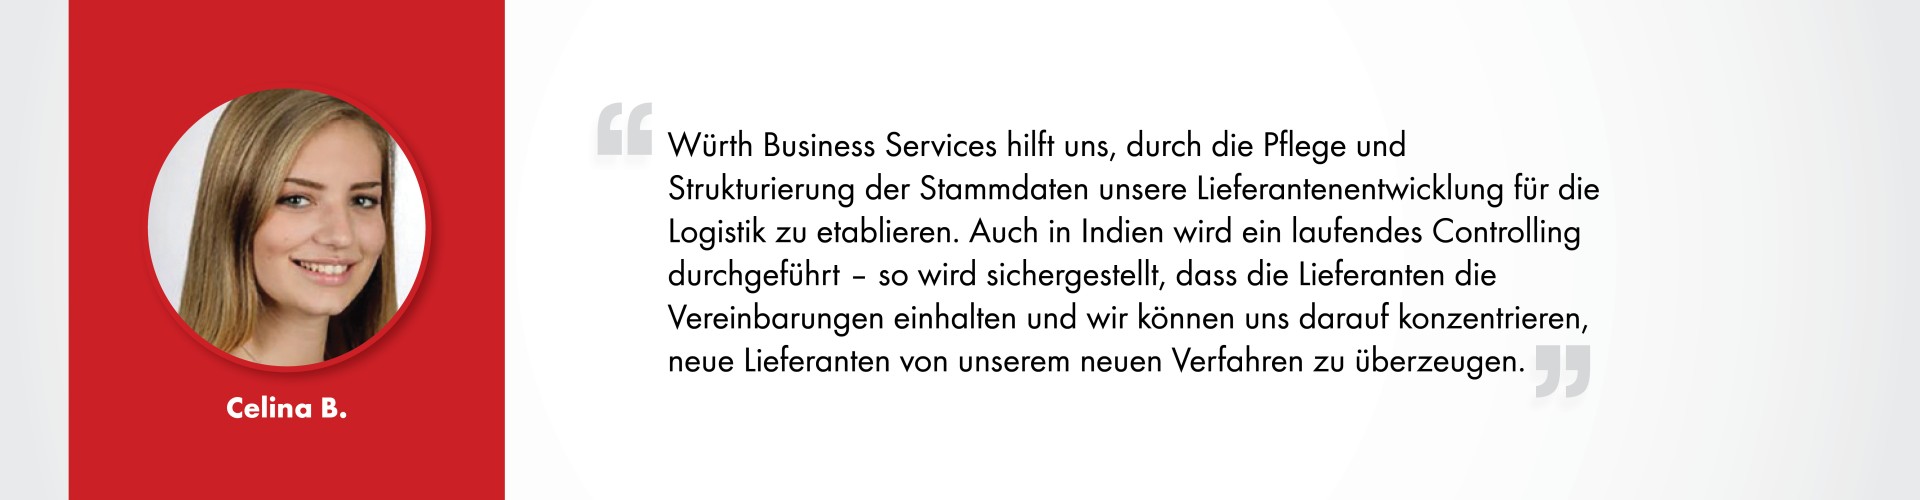 Celina B._Würth Business Services_Kundenstimmen 